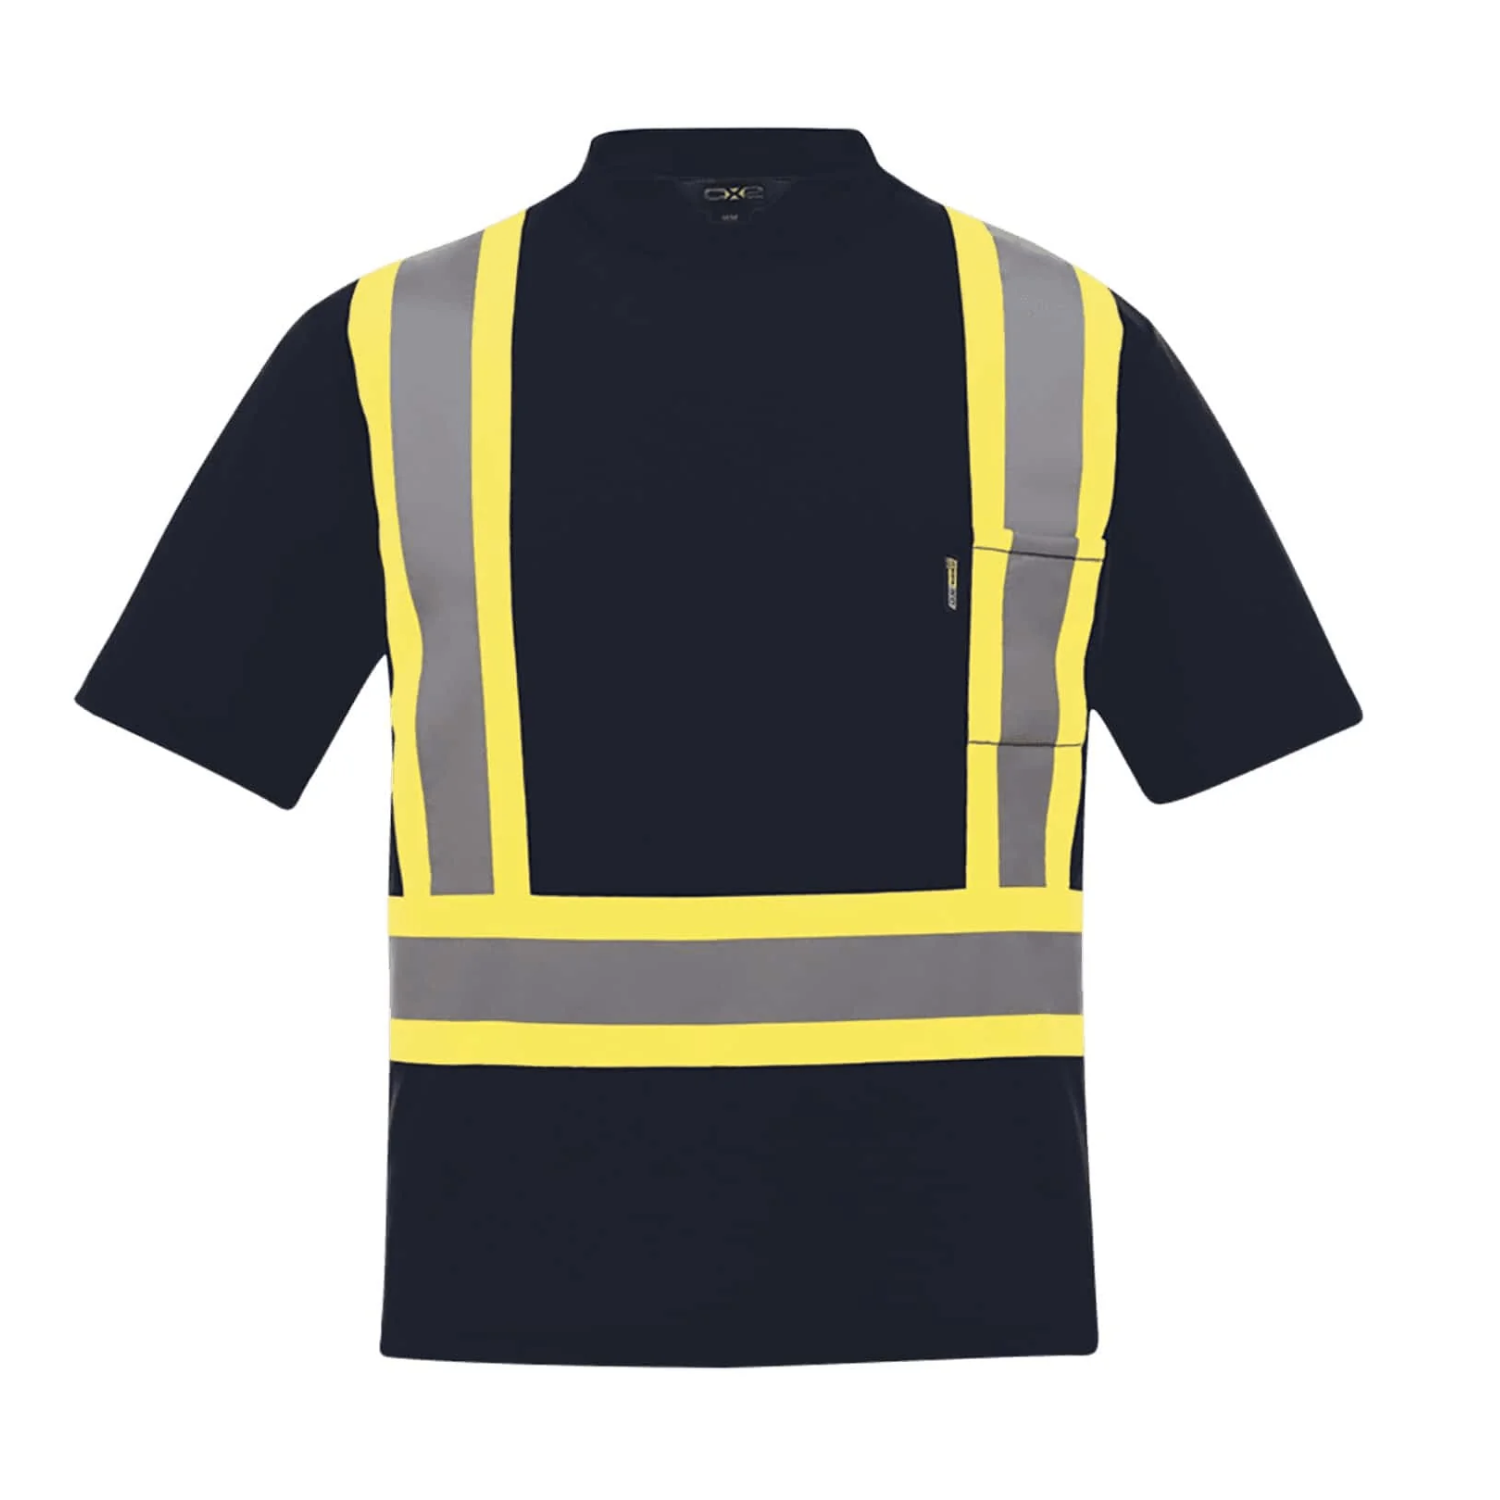 S05960 - Watchman - Men's Hi-Vis Safety T-Shirt - promopig